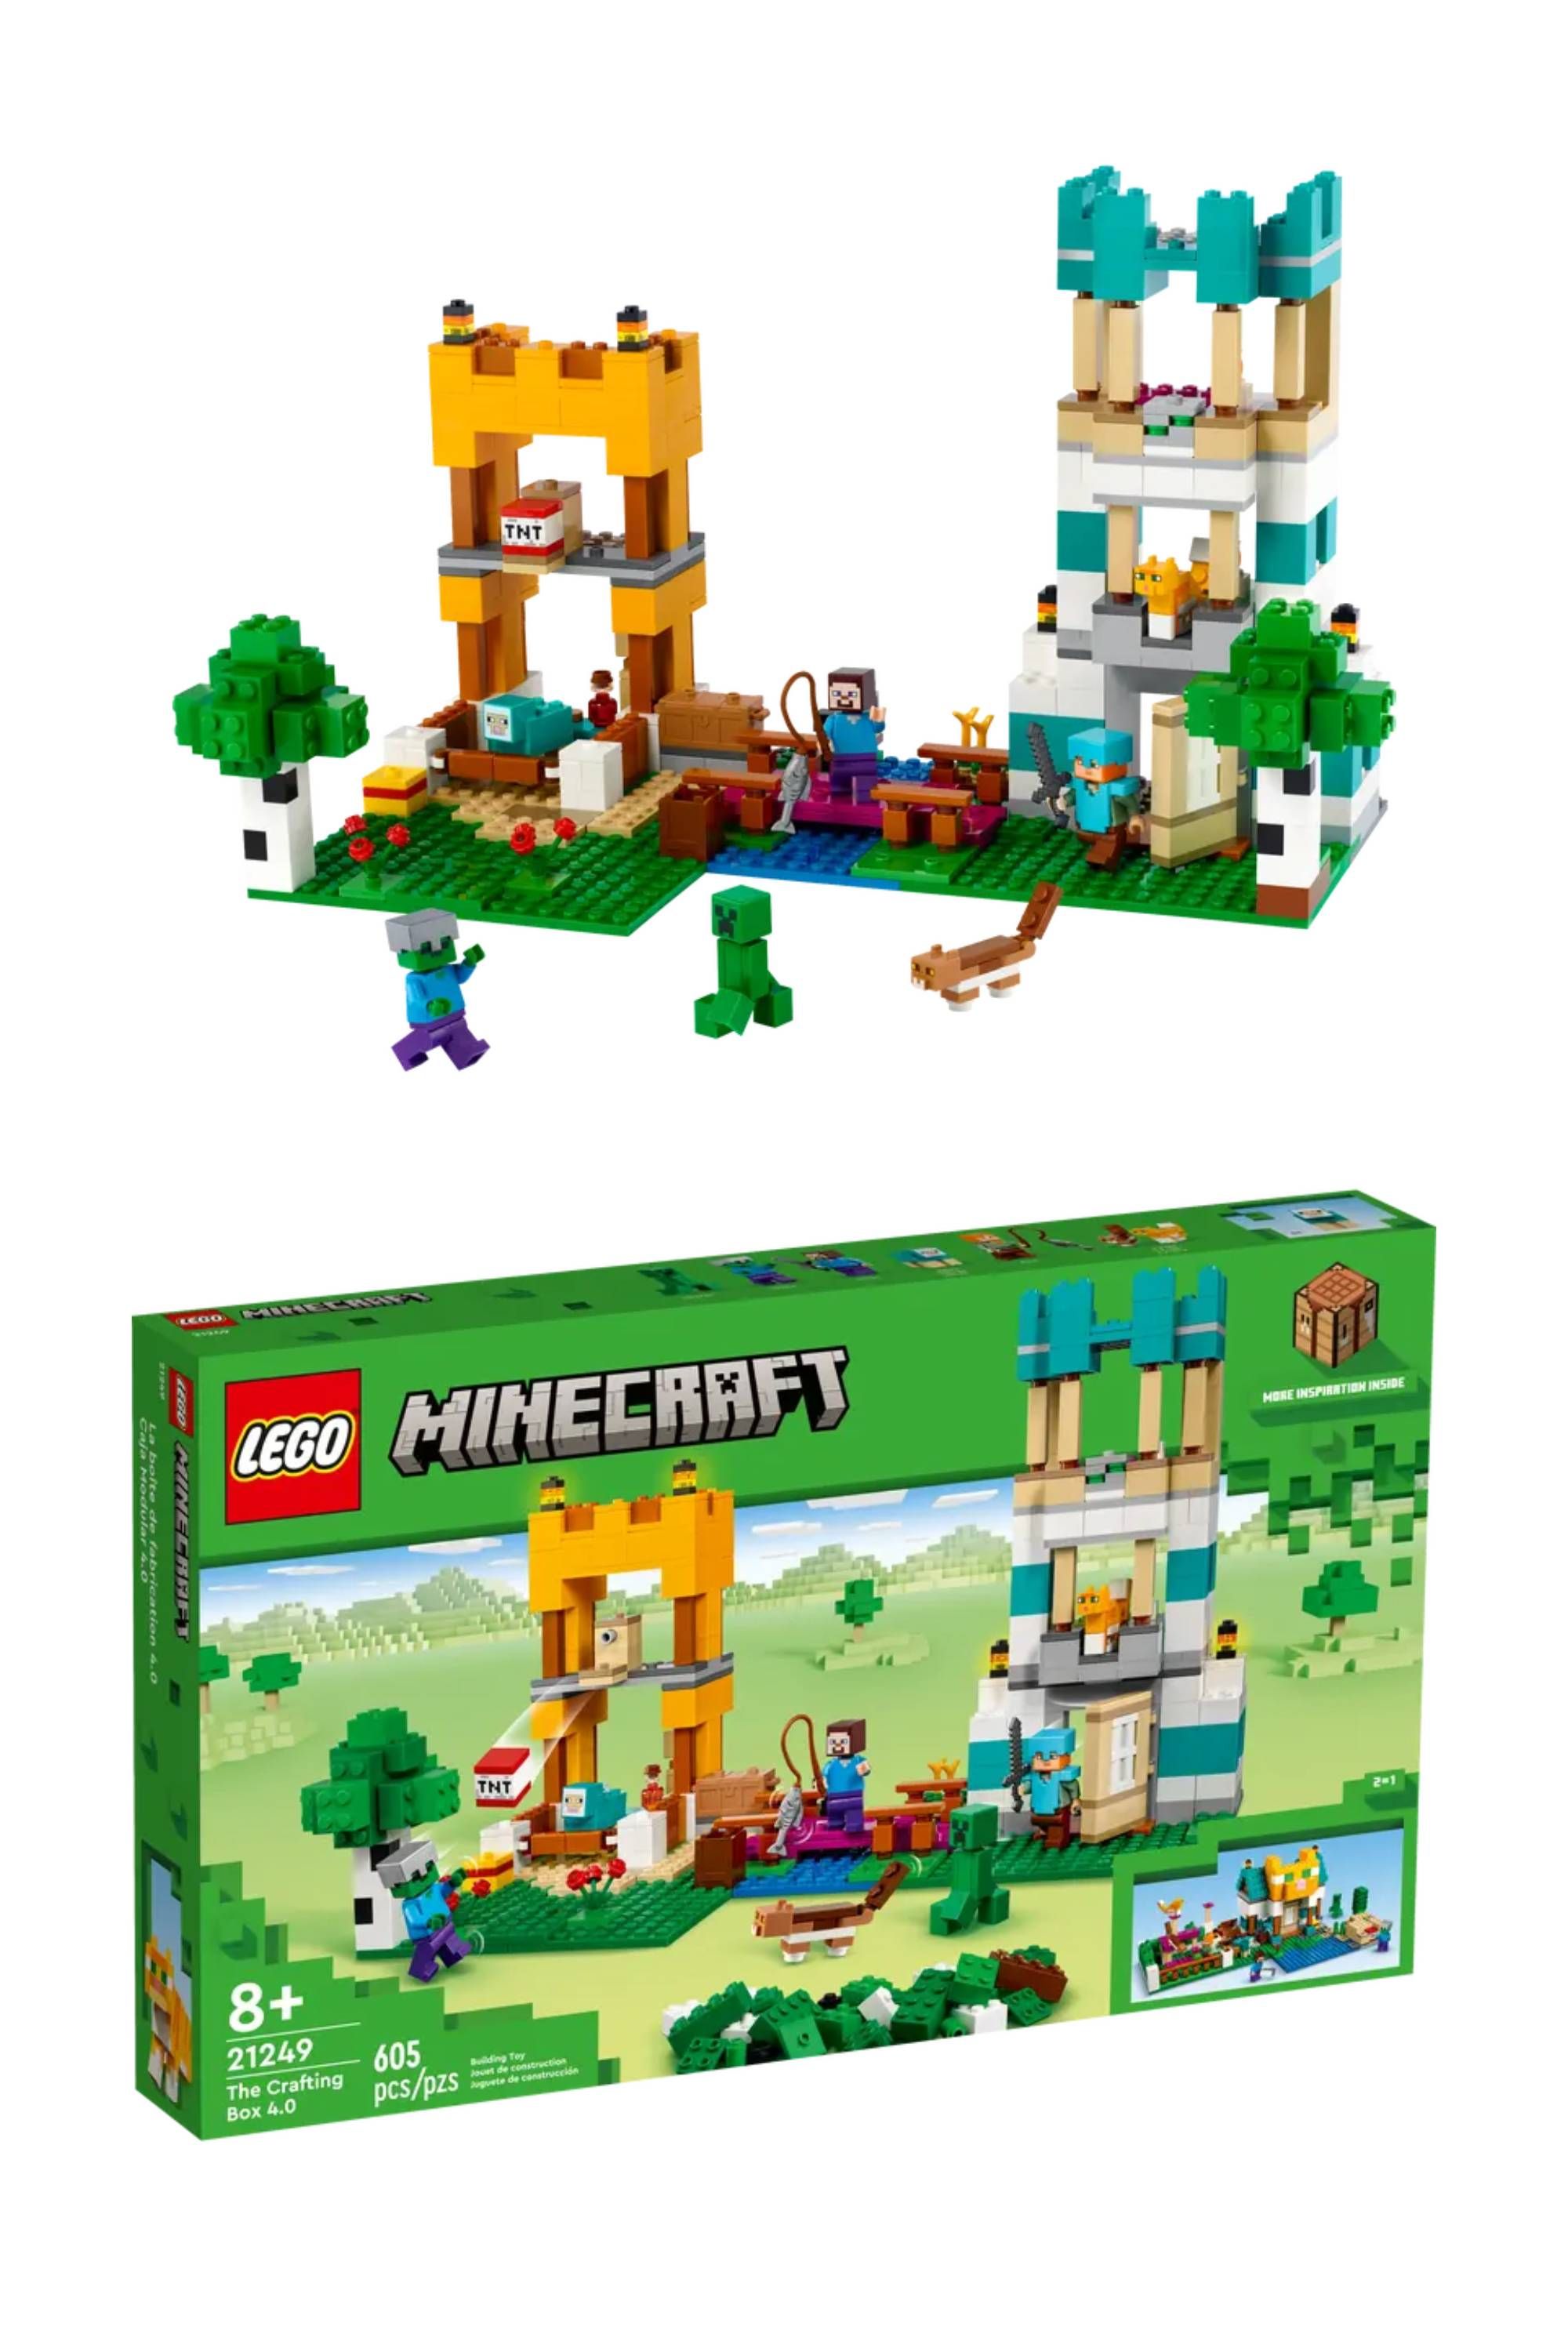 LEGO Minecraft - The Crafting Box 4.0